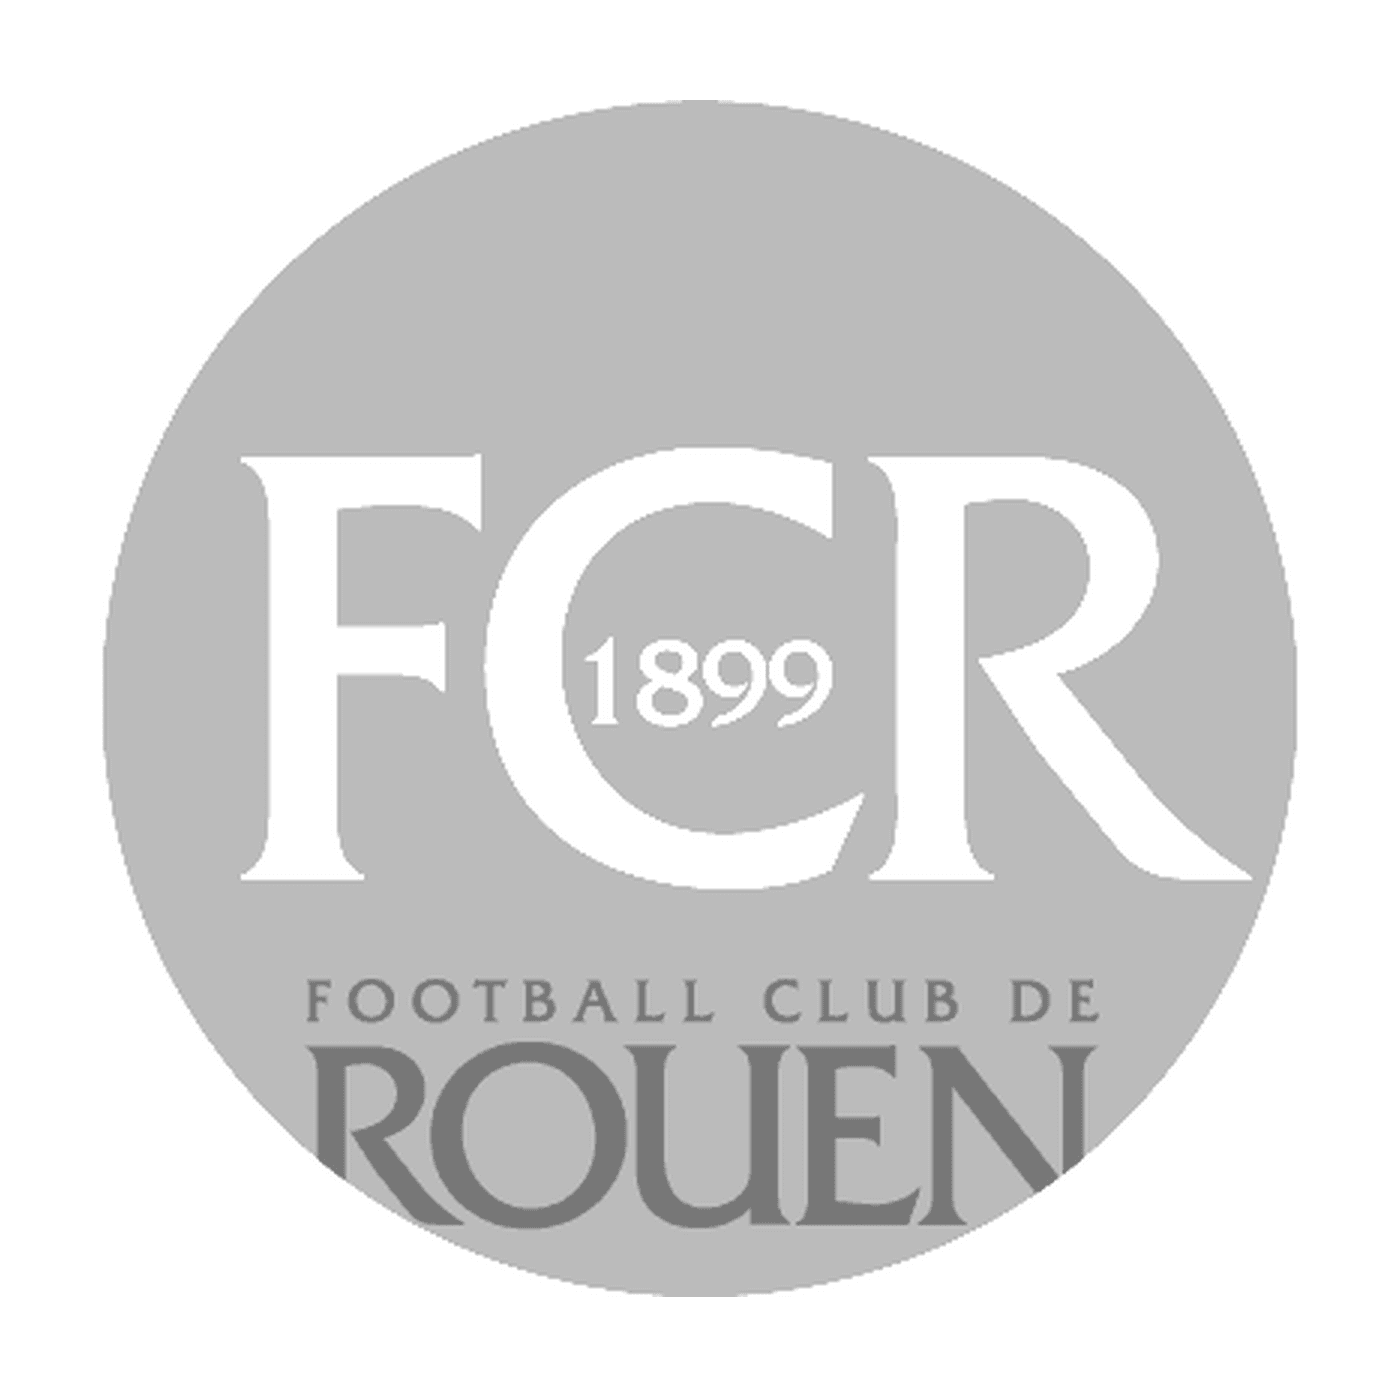  Logotipo do Clube de Futebol de Rouen 